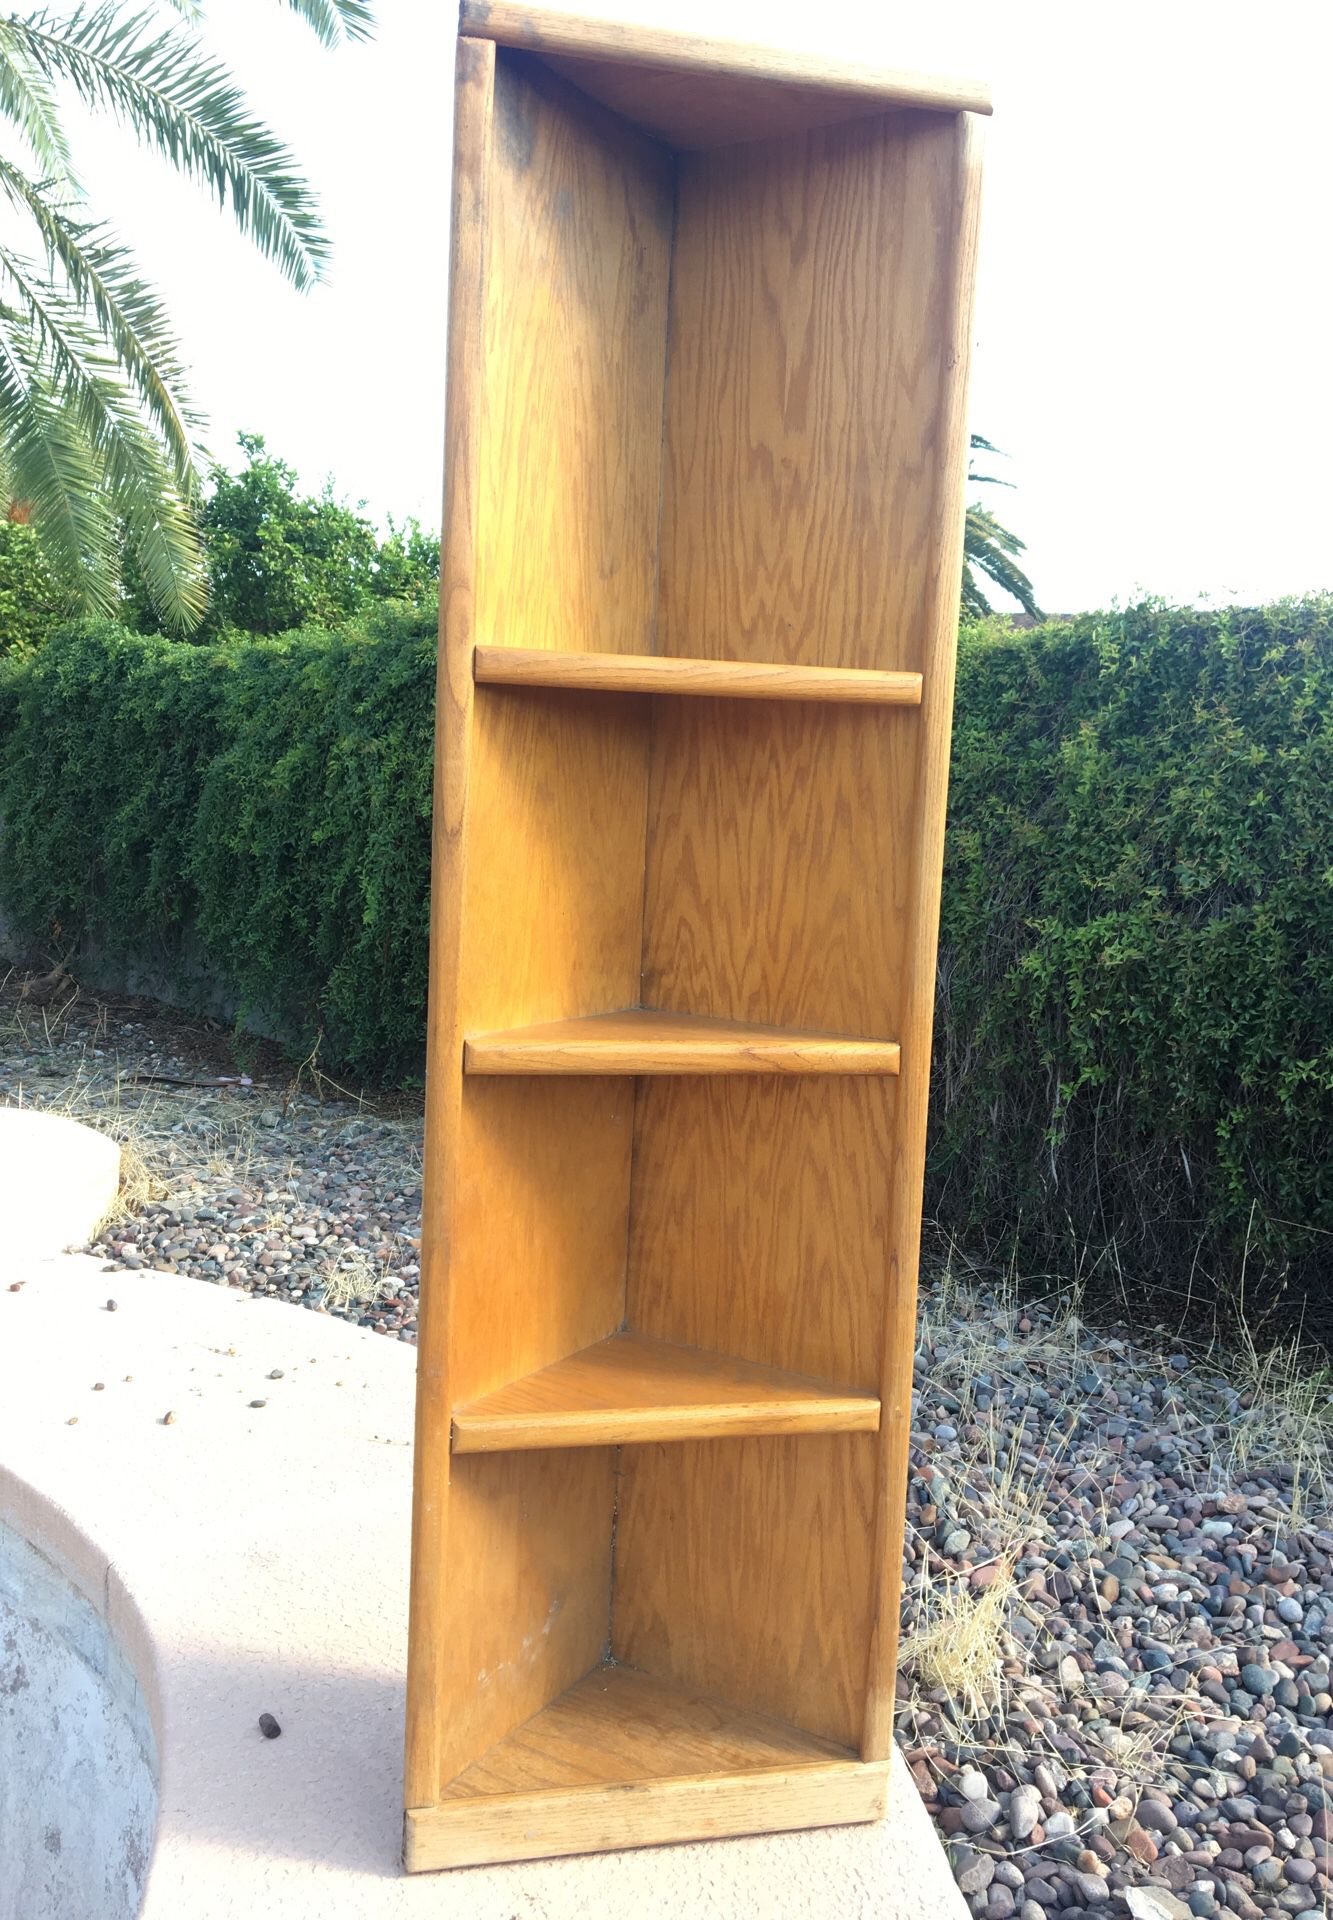 6.5’ rough wood corner shelf - 4 Triangular shelves, 14 inches deep